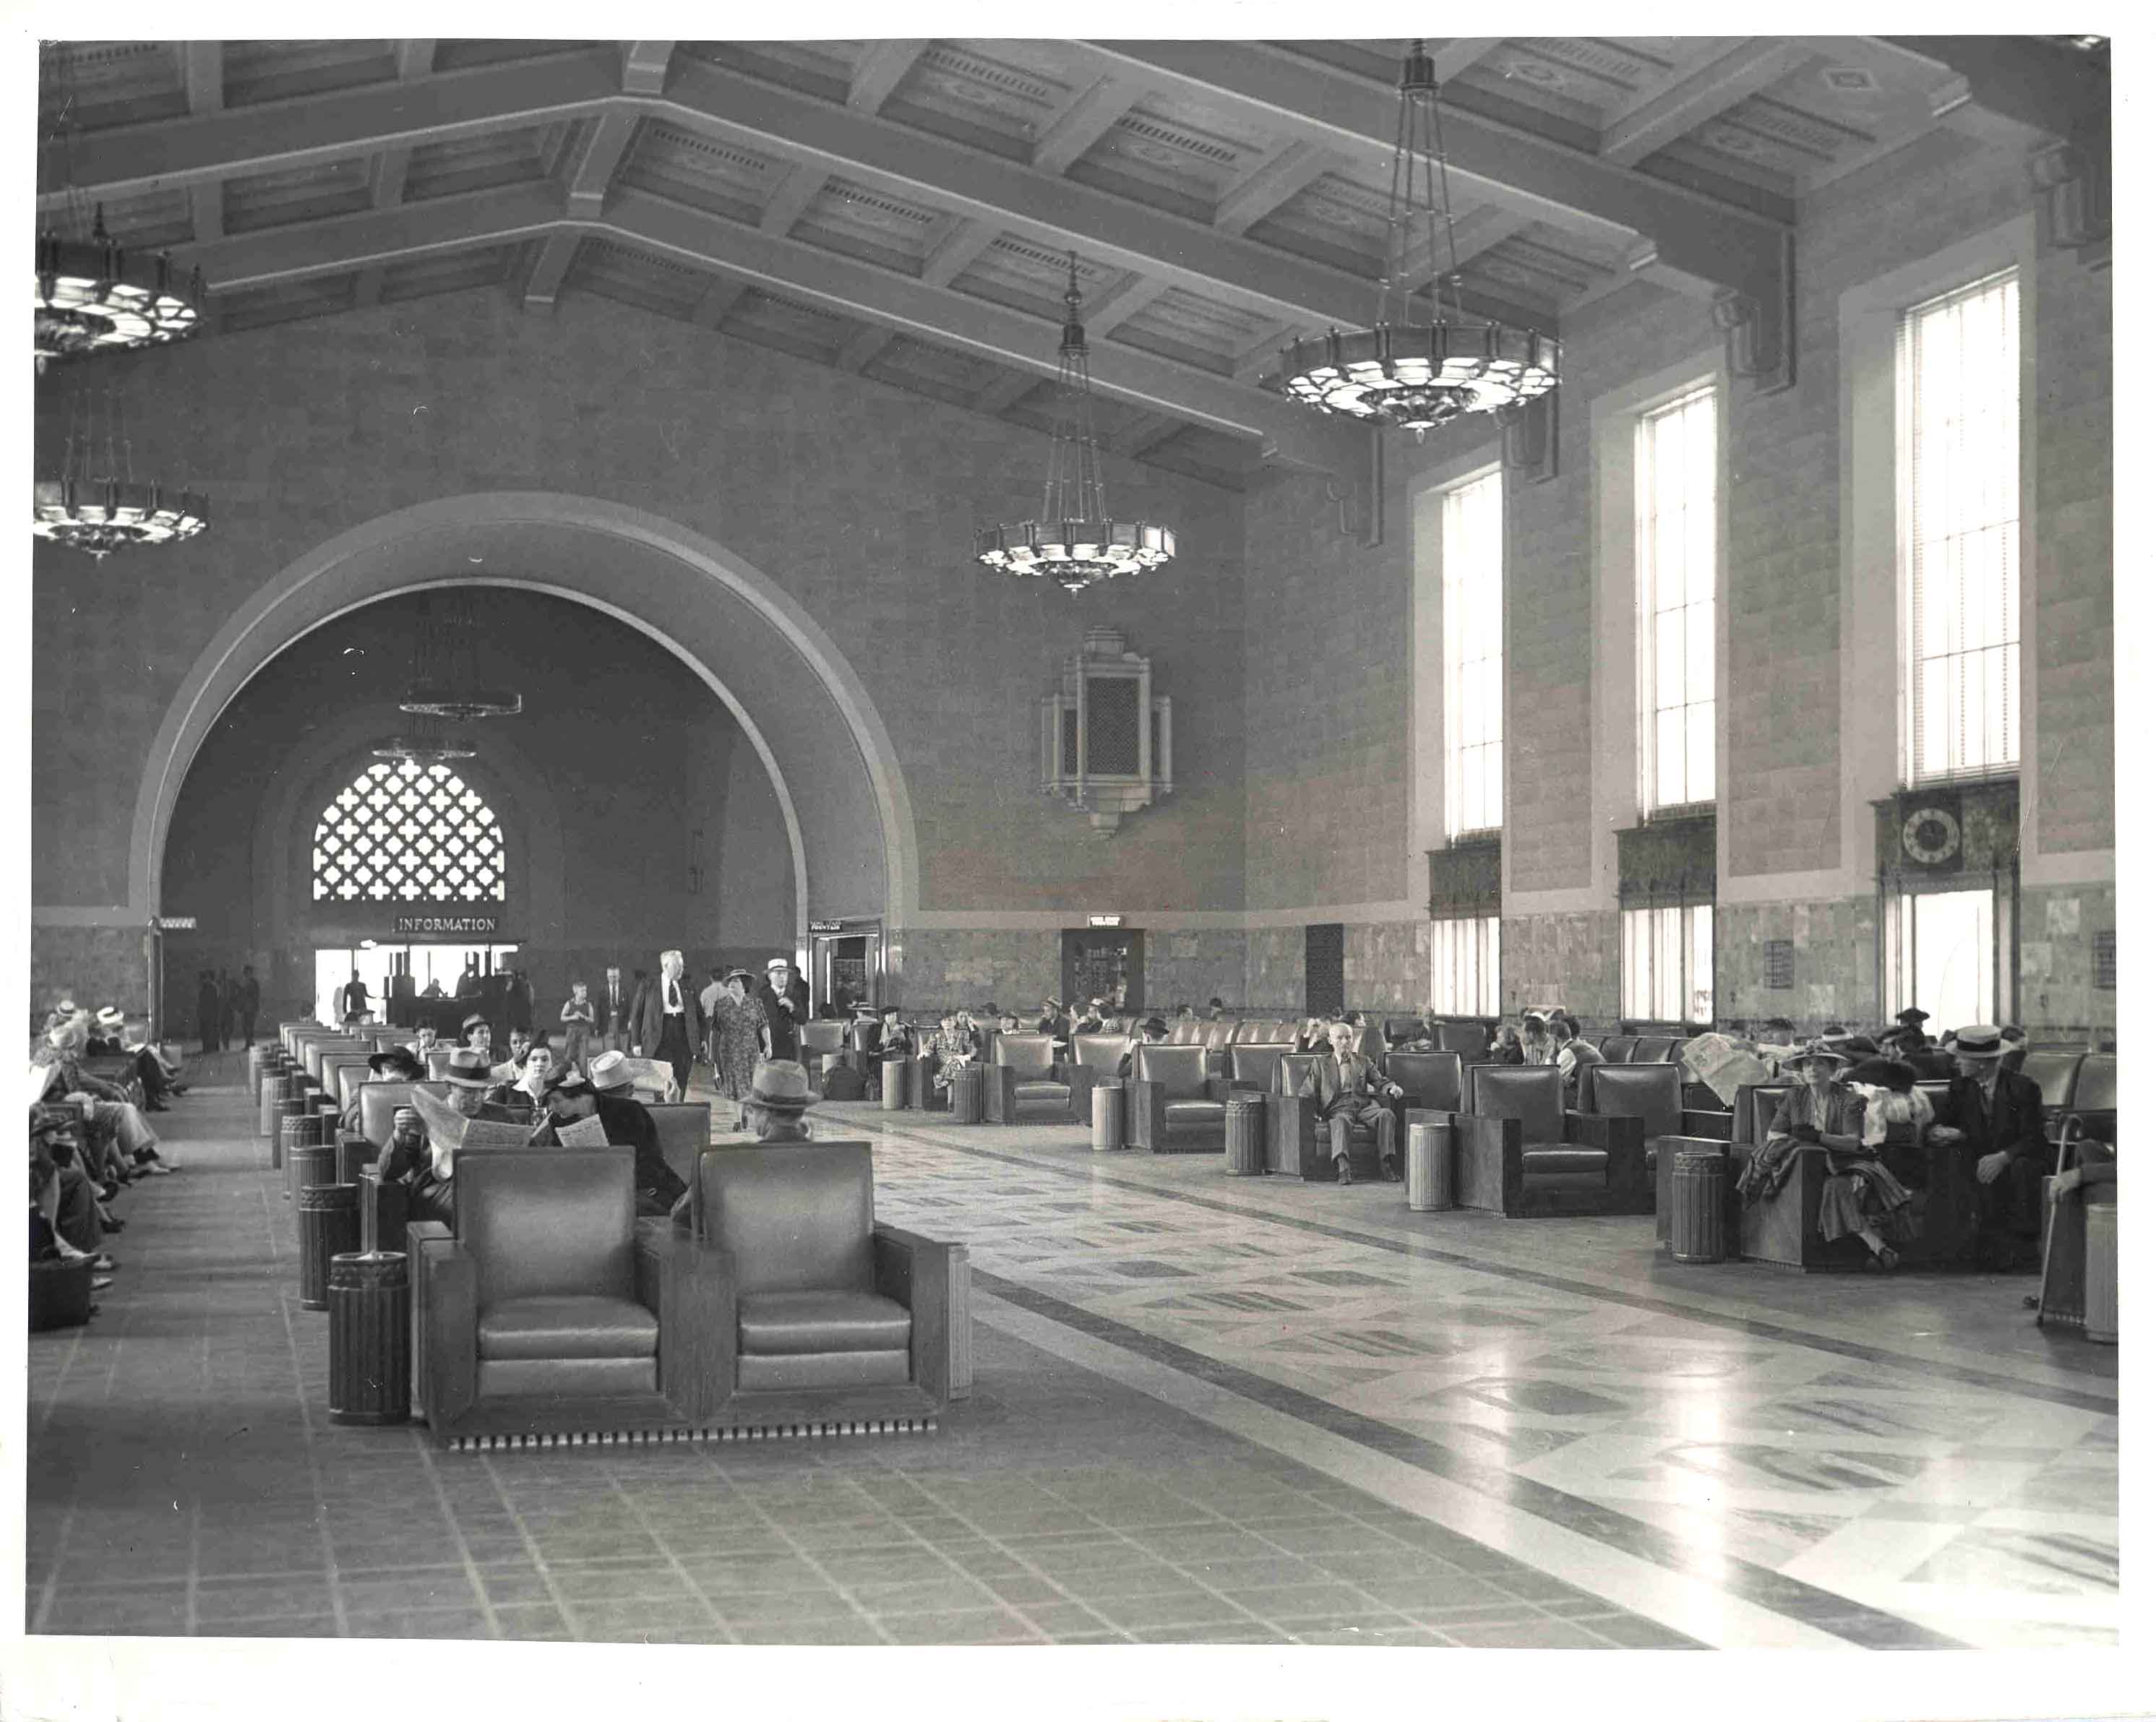 Inside Union Station, 1939.